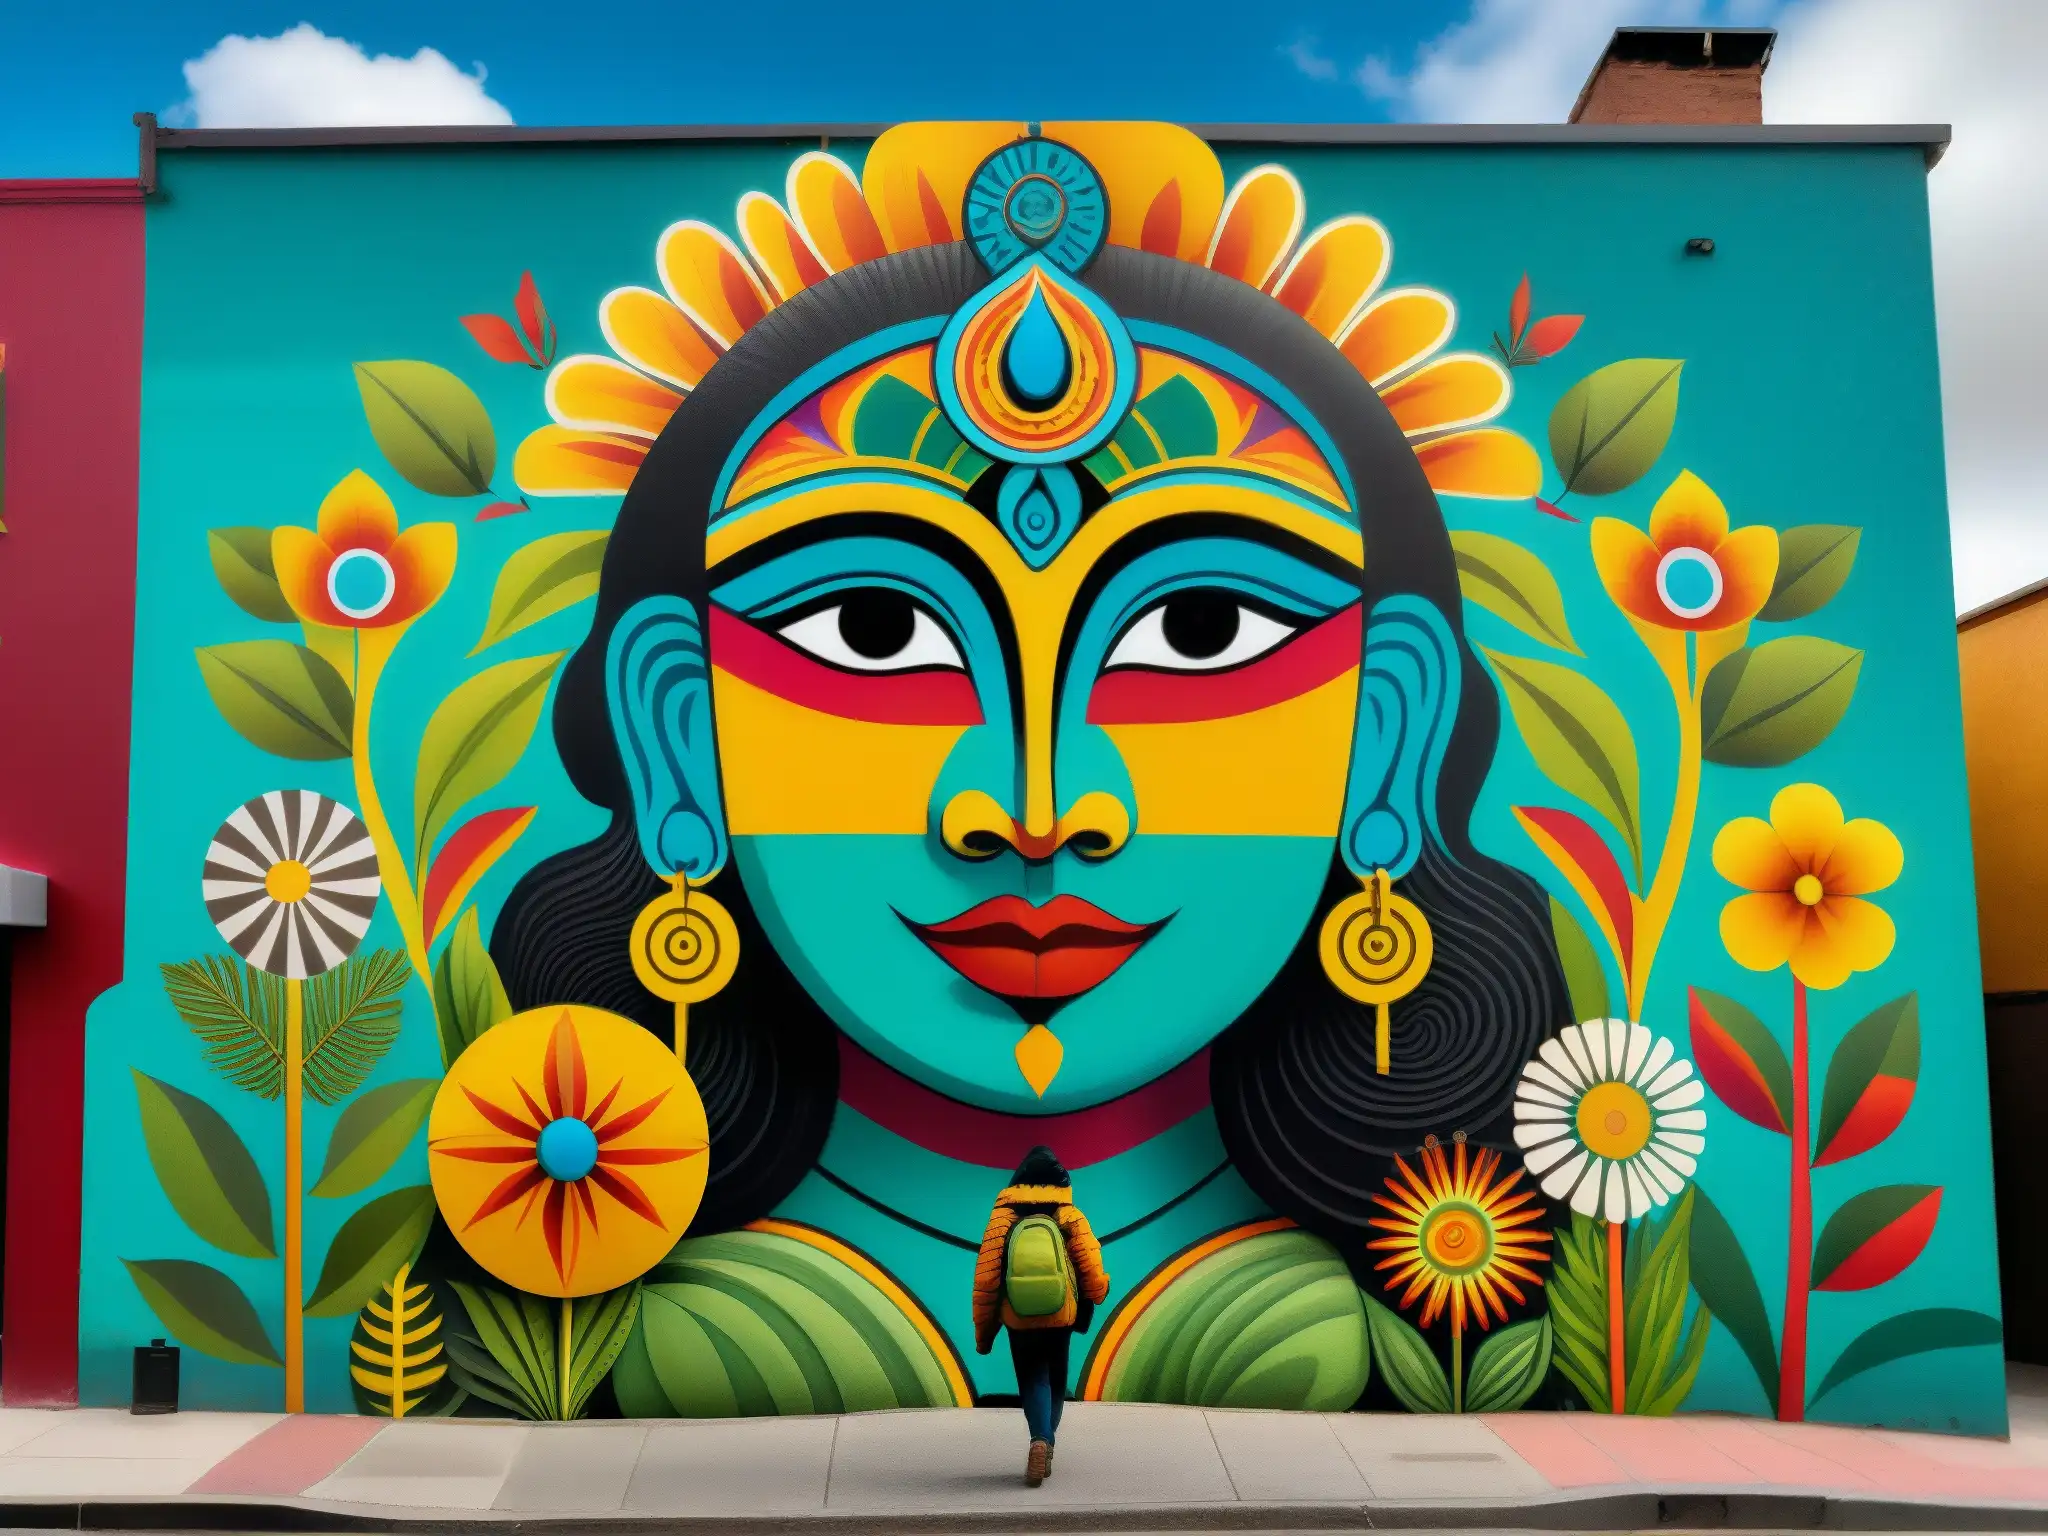 Un mural urbano moderno de la Pachamama, deidad Andina con significado moderno, fusiona arte tradicional con estética urbana